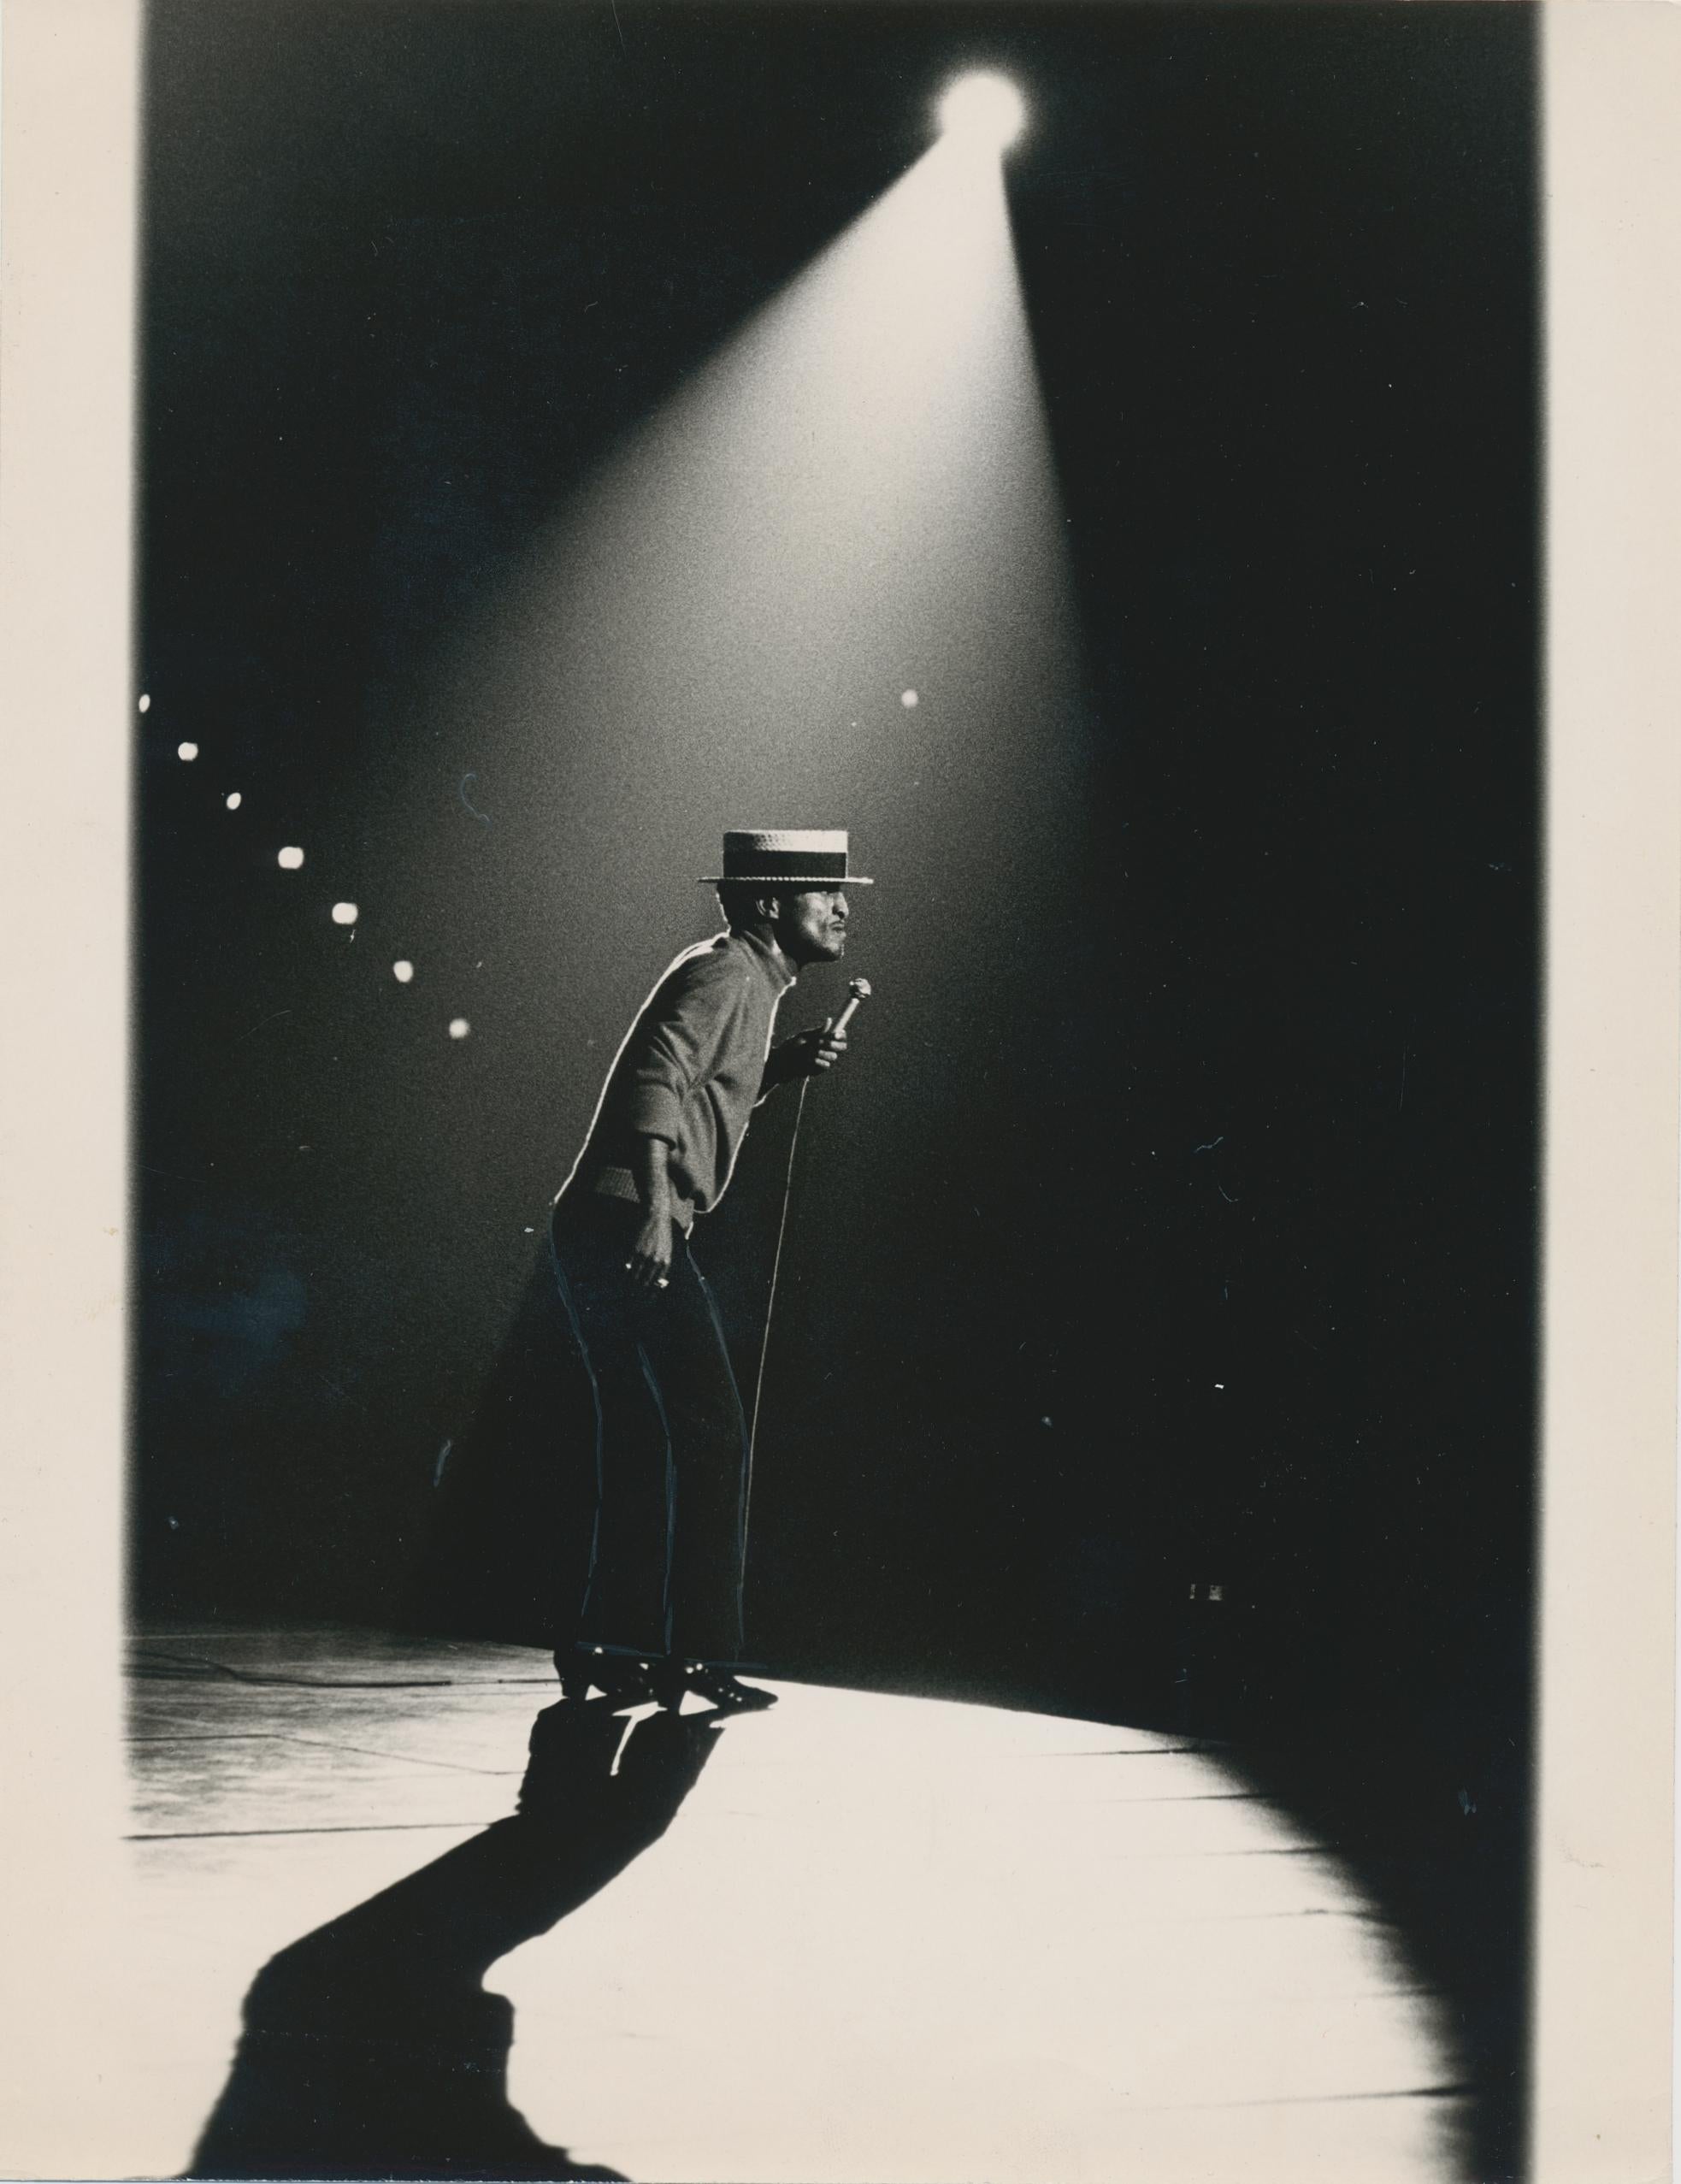 Unknown Black and White Photograph - Sammy Davis Jr., spotlight on stage, unknown date